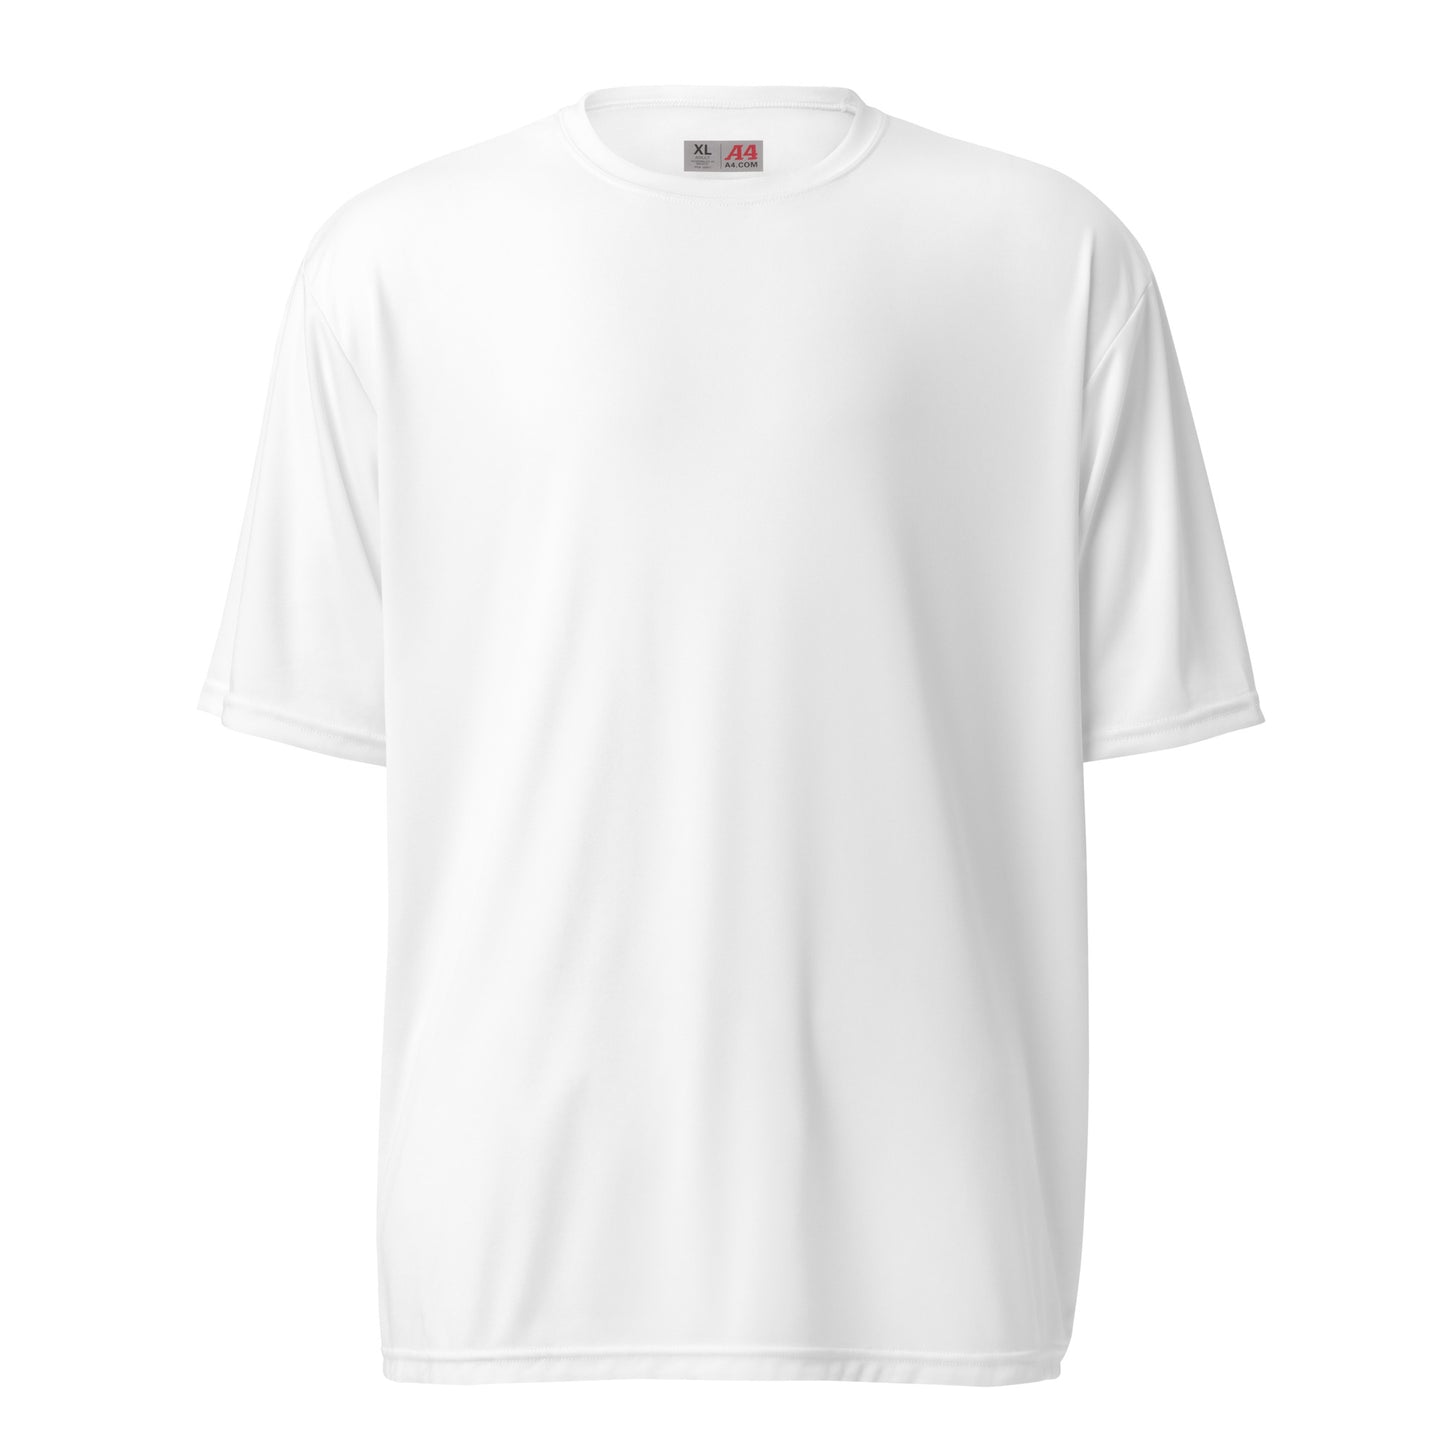 Unisex performance crew neck t-shirt - Pickleball